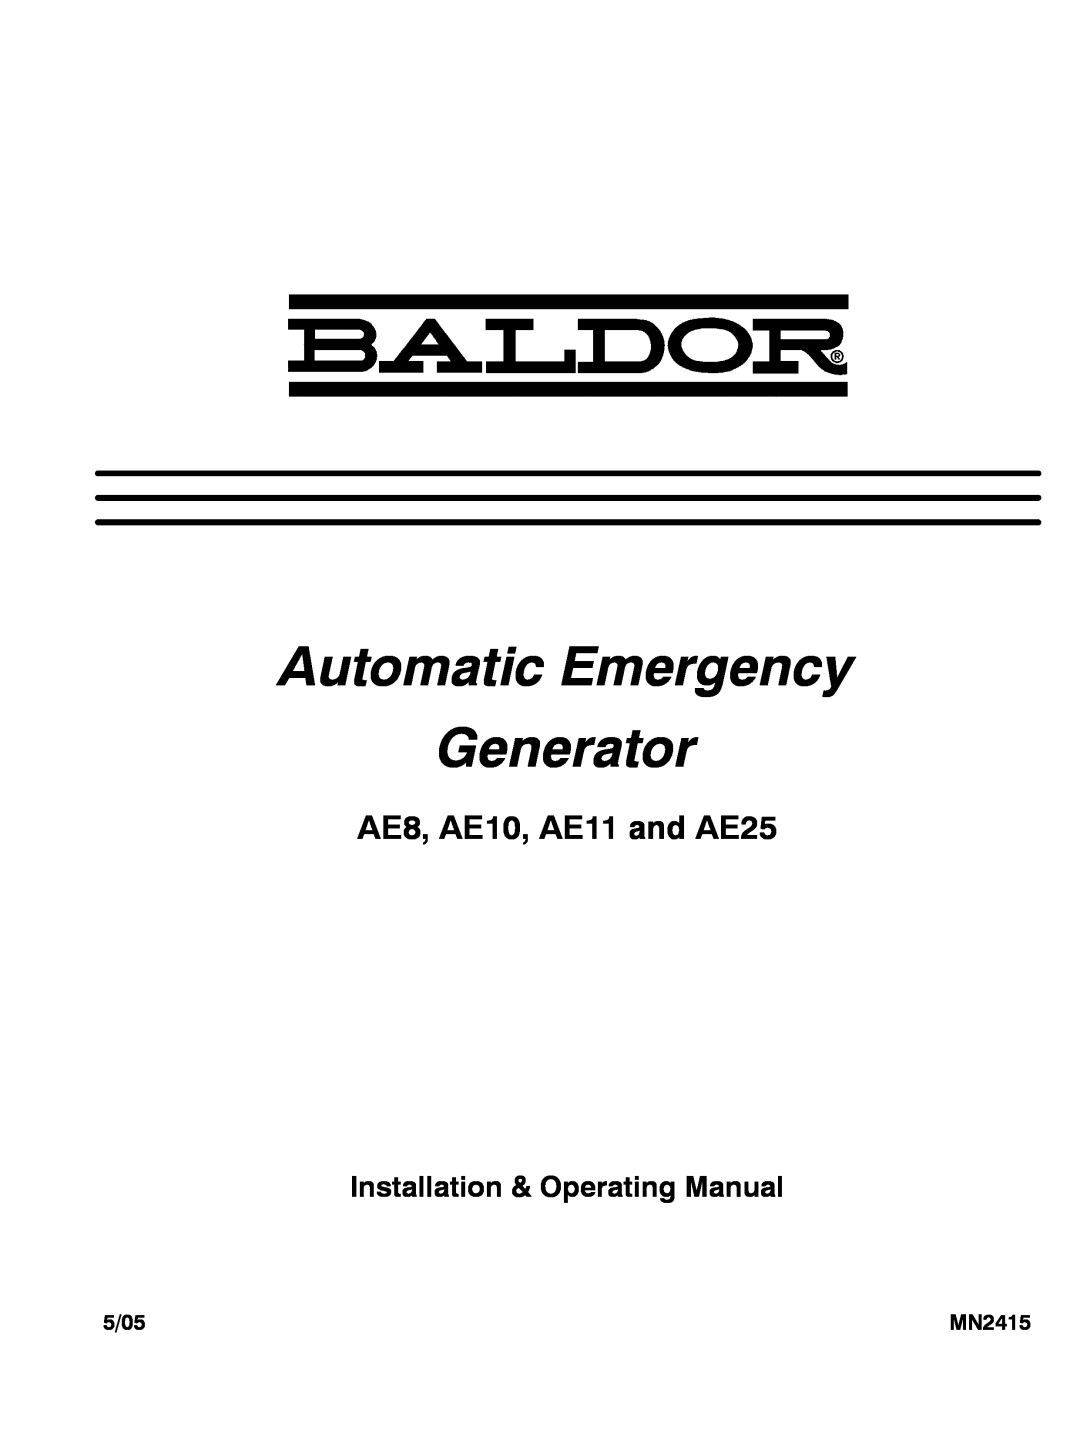 Baldor manual Automatic Emergency, Generator, AE8, AE10, AE11 and AE25, Installation & Operating Manual, 5/05, MN2415 